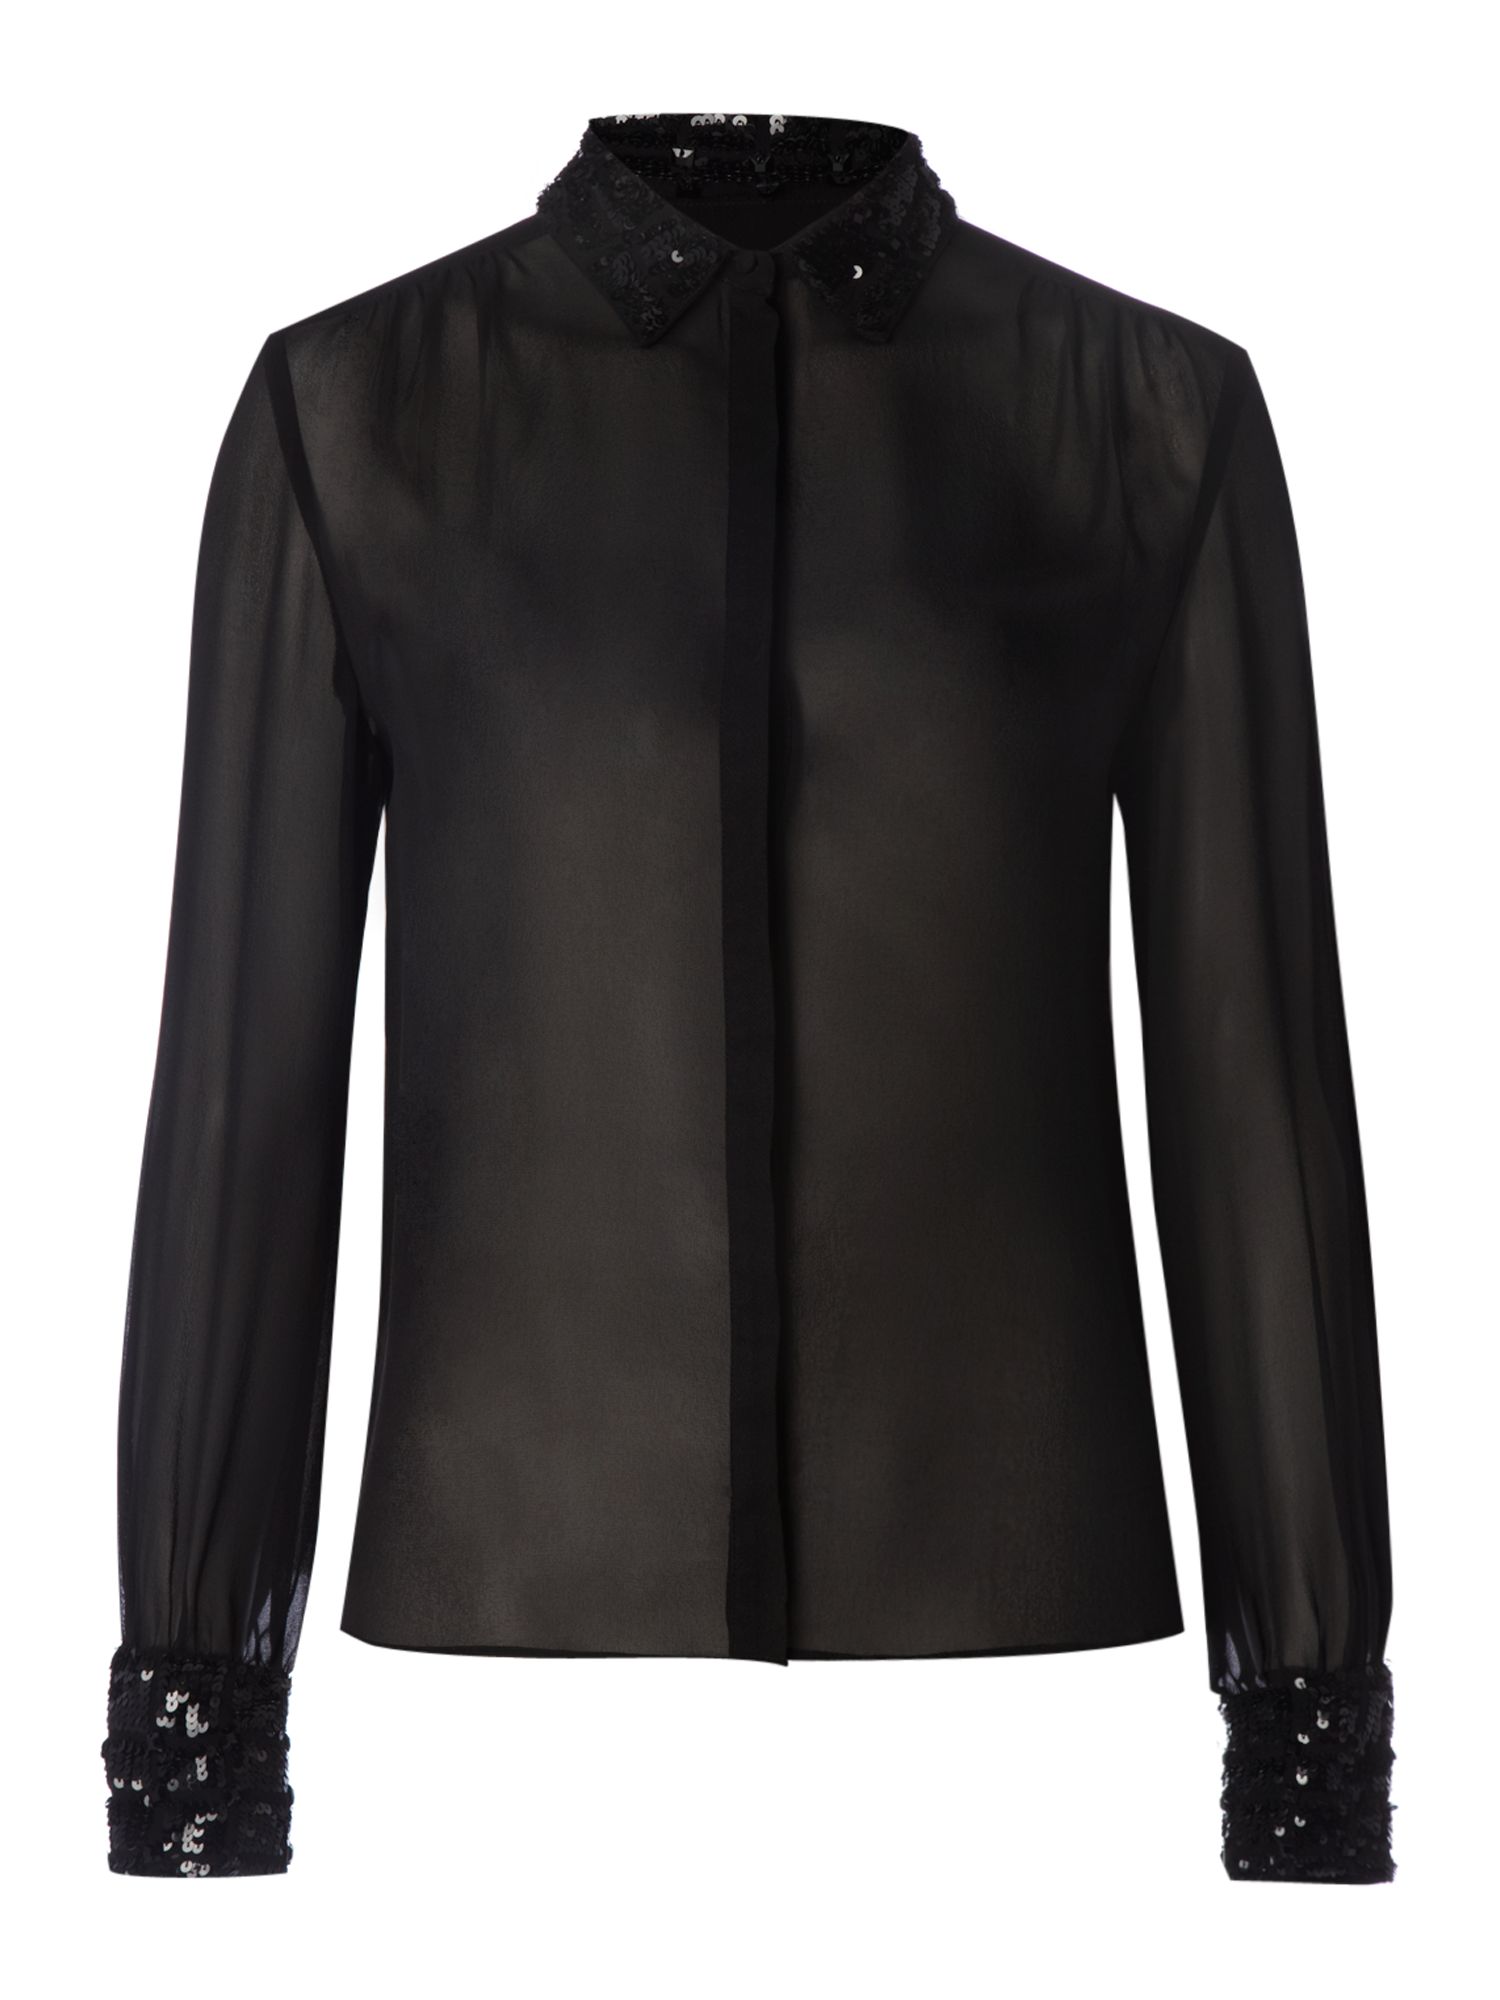 Max Mara Studio Peirak Sheer Blouse with Sequin Collar in Black | Lyst